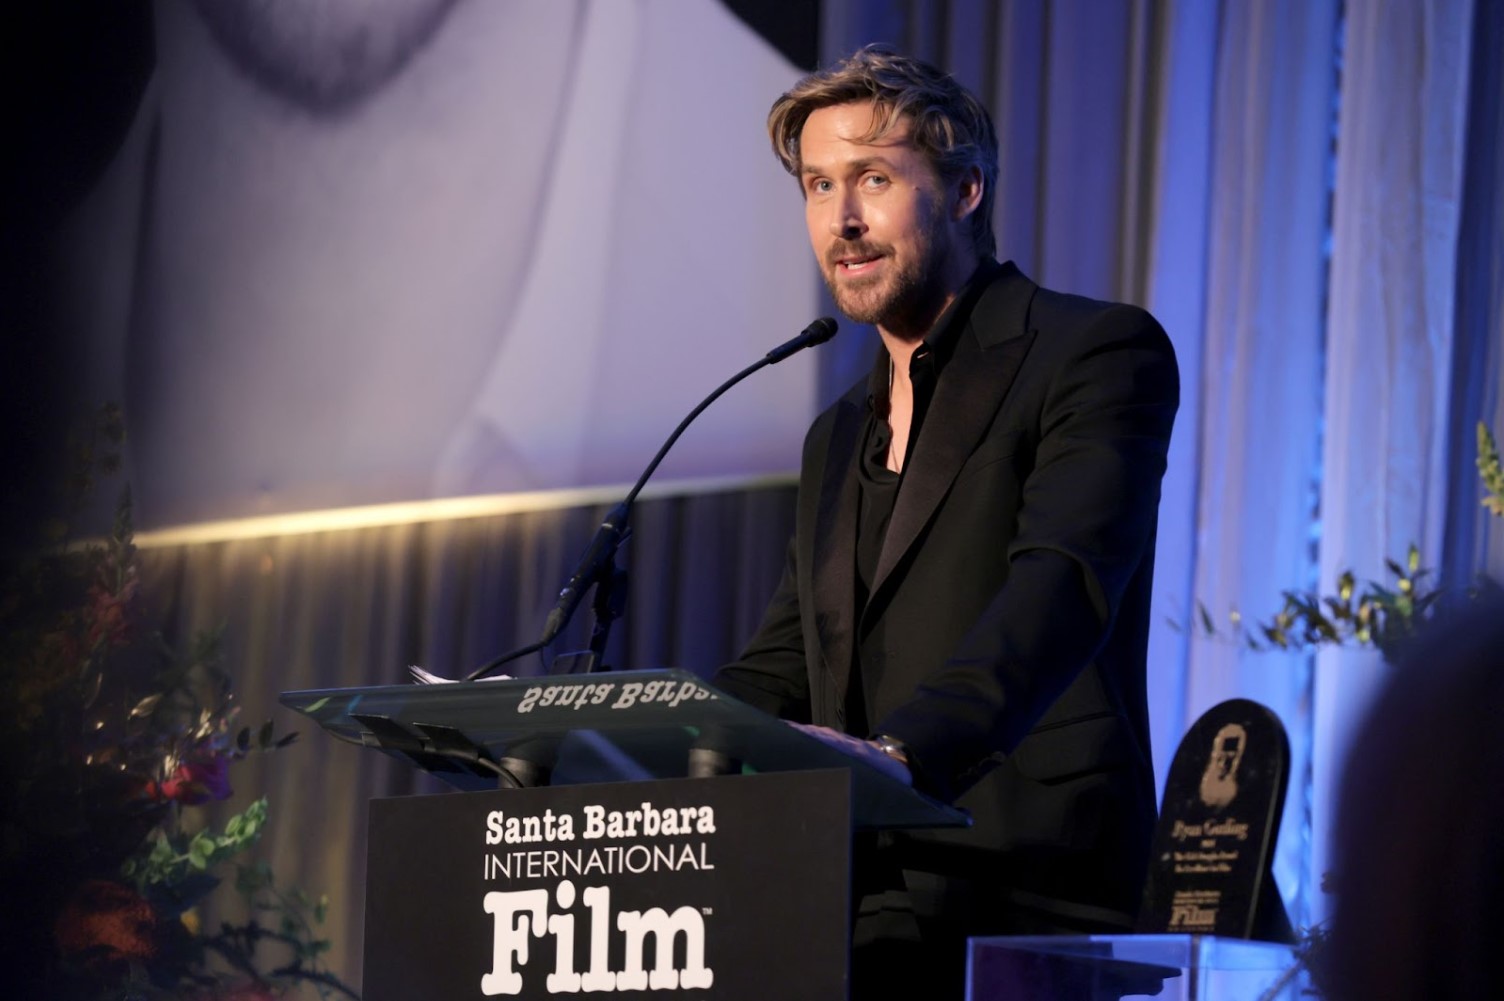 Ryan Gosling speaks onstage while accepting an award at Santa Barbara International Film Festival